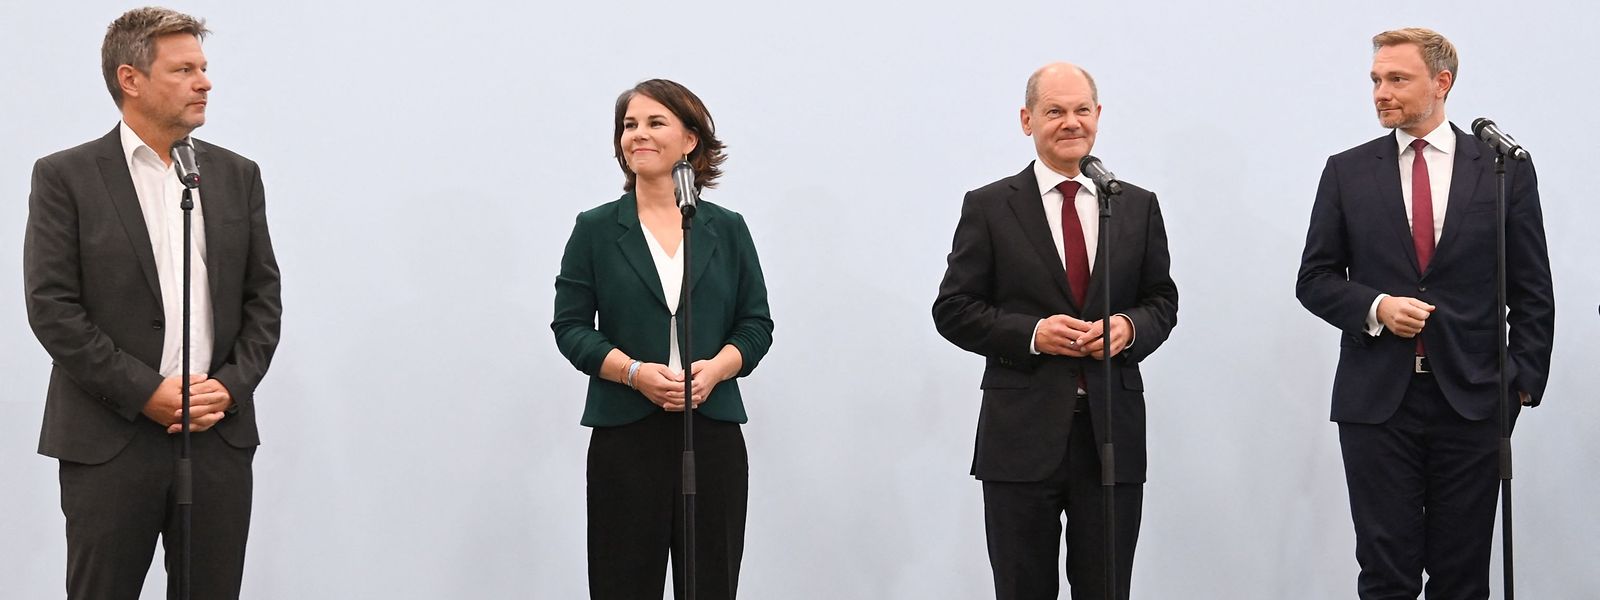 Robert Habeck, Annalena Baerbock (Die Grünen), Olaf Scholz (SPD) Christian Lindner (FDP) am 15. Oktober in Berlin.